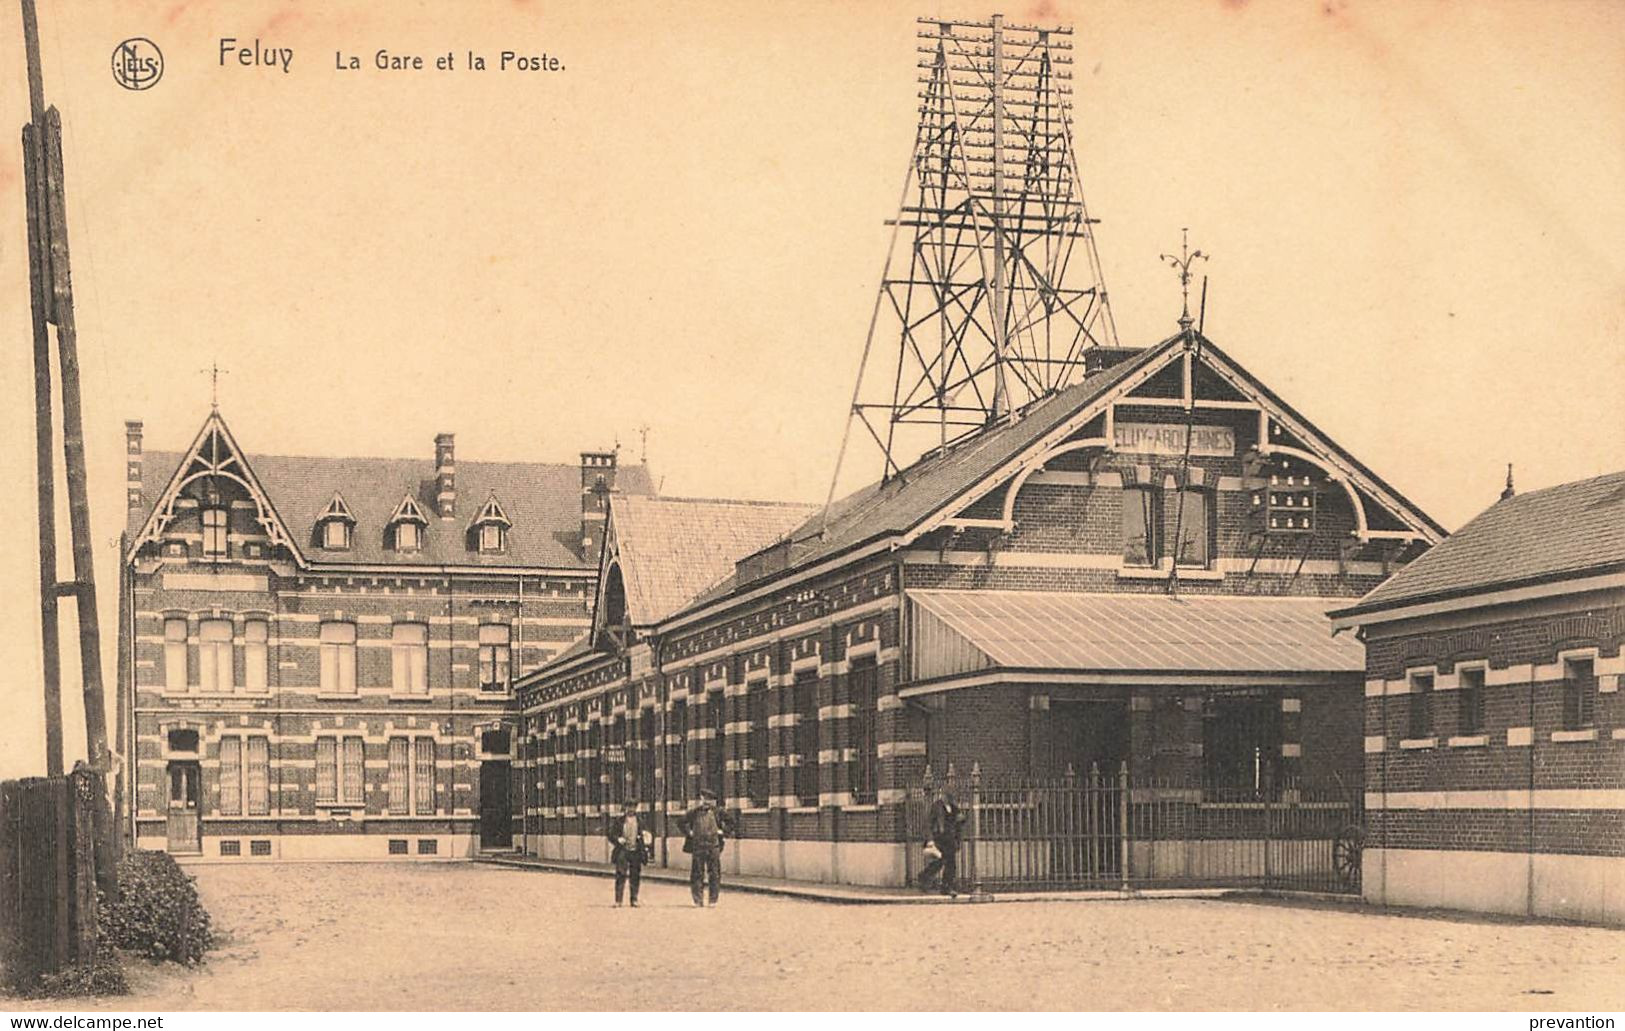 FELUY - La Gare Et La Poste - Seneffe